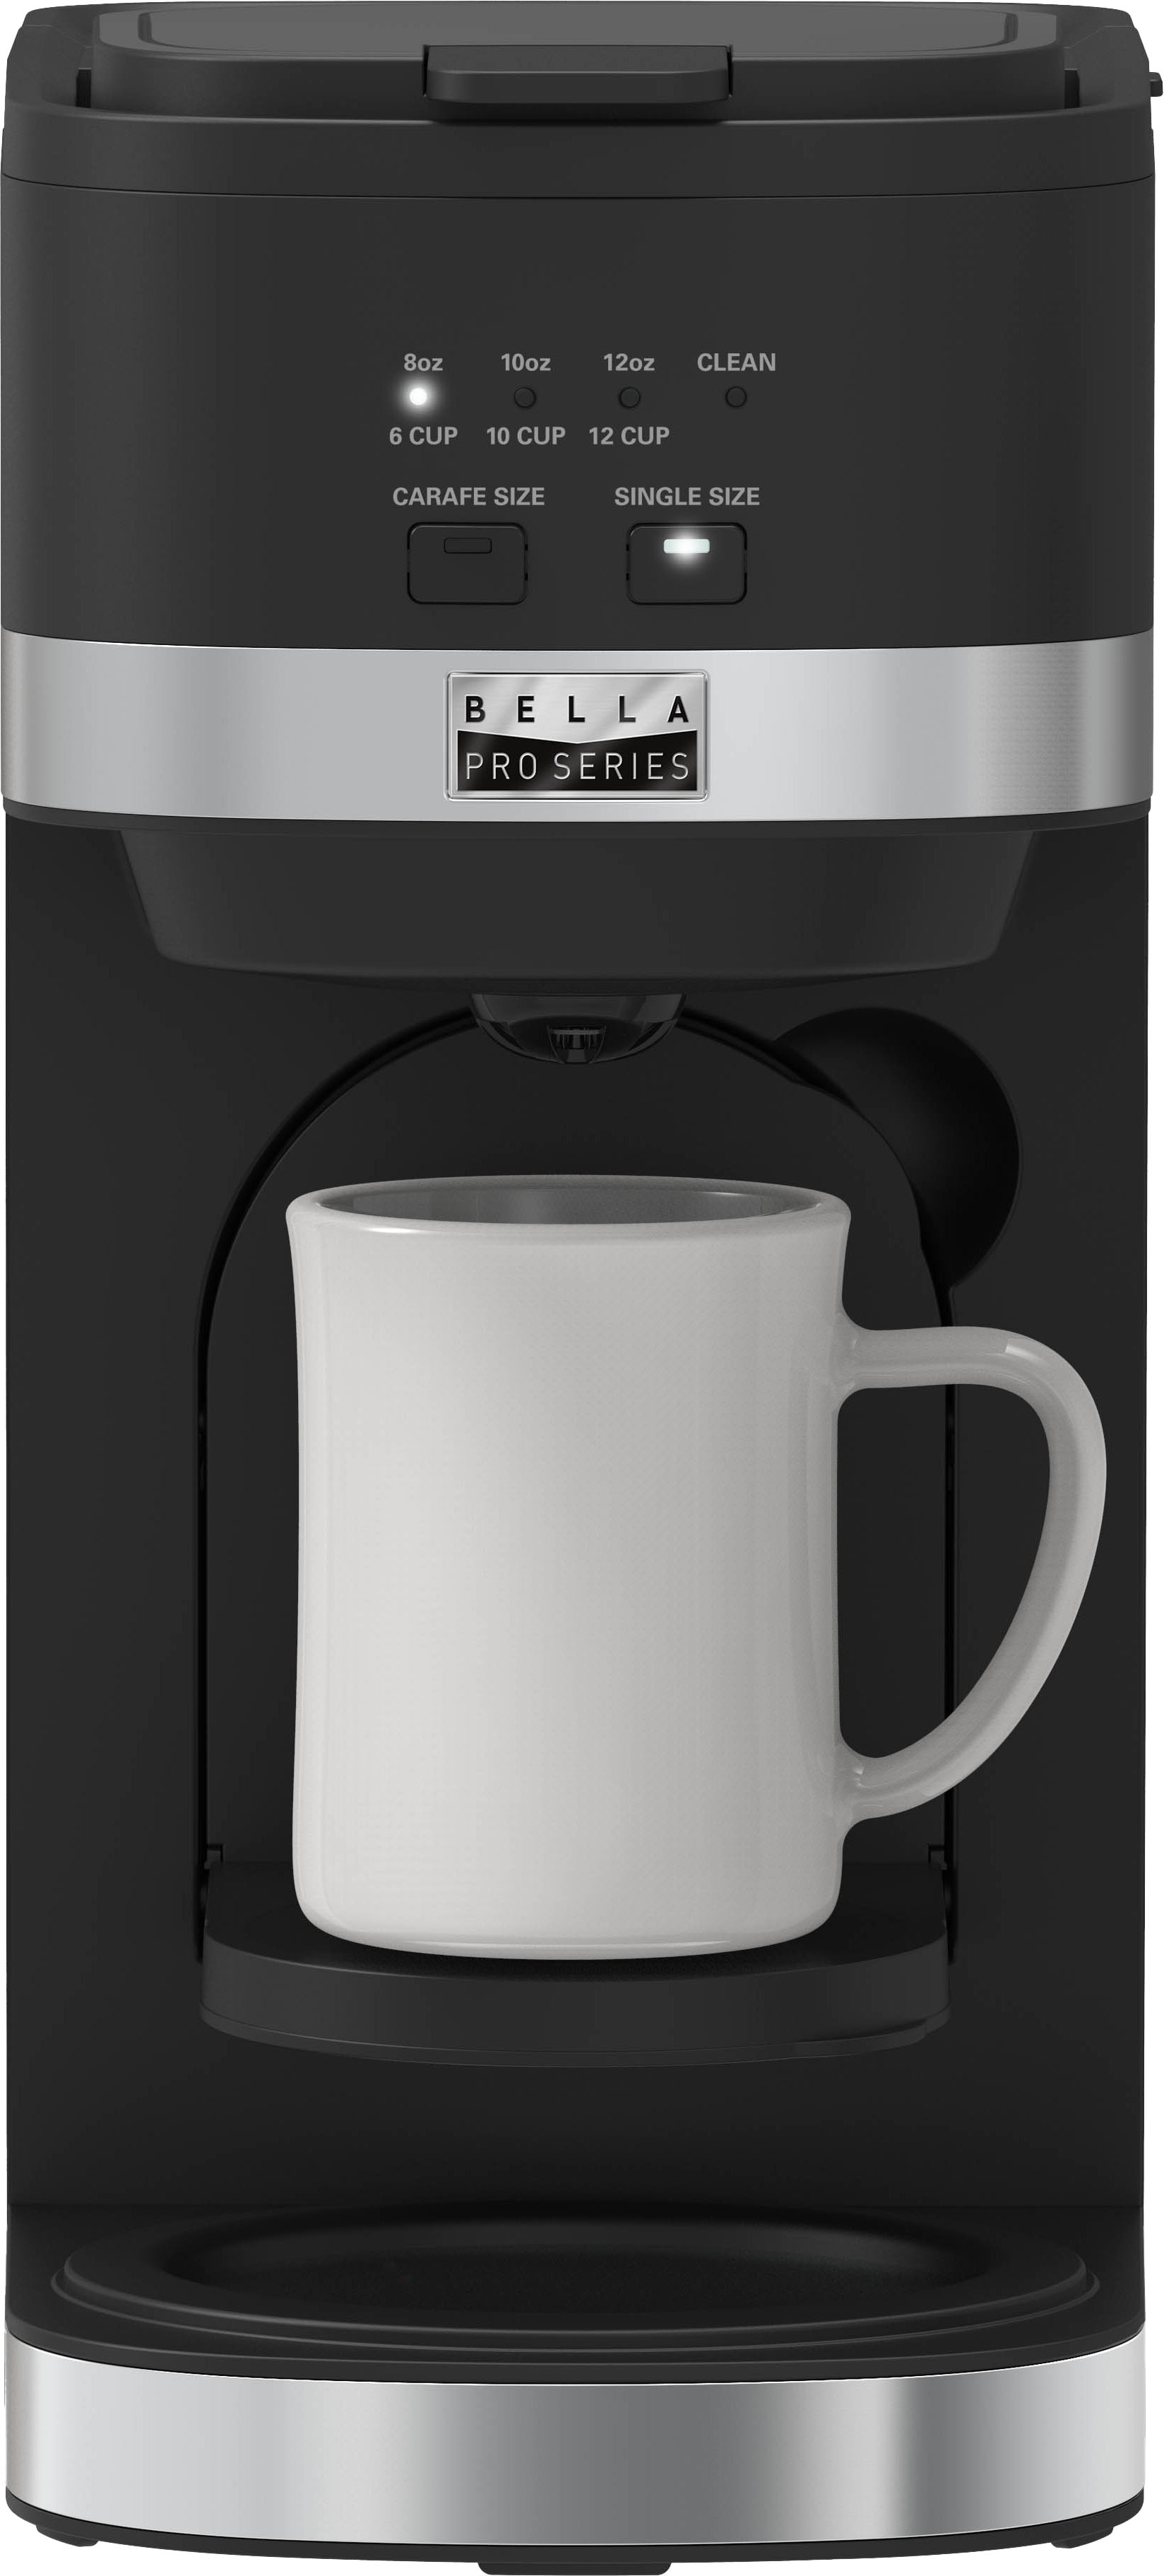 BELLA 3 brew sizes Black Single-Serve Coffee Maker in the Single